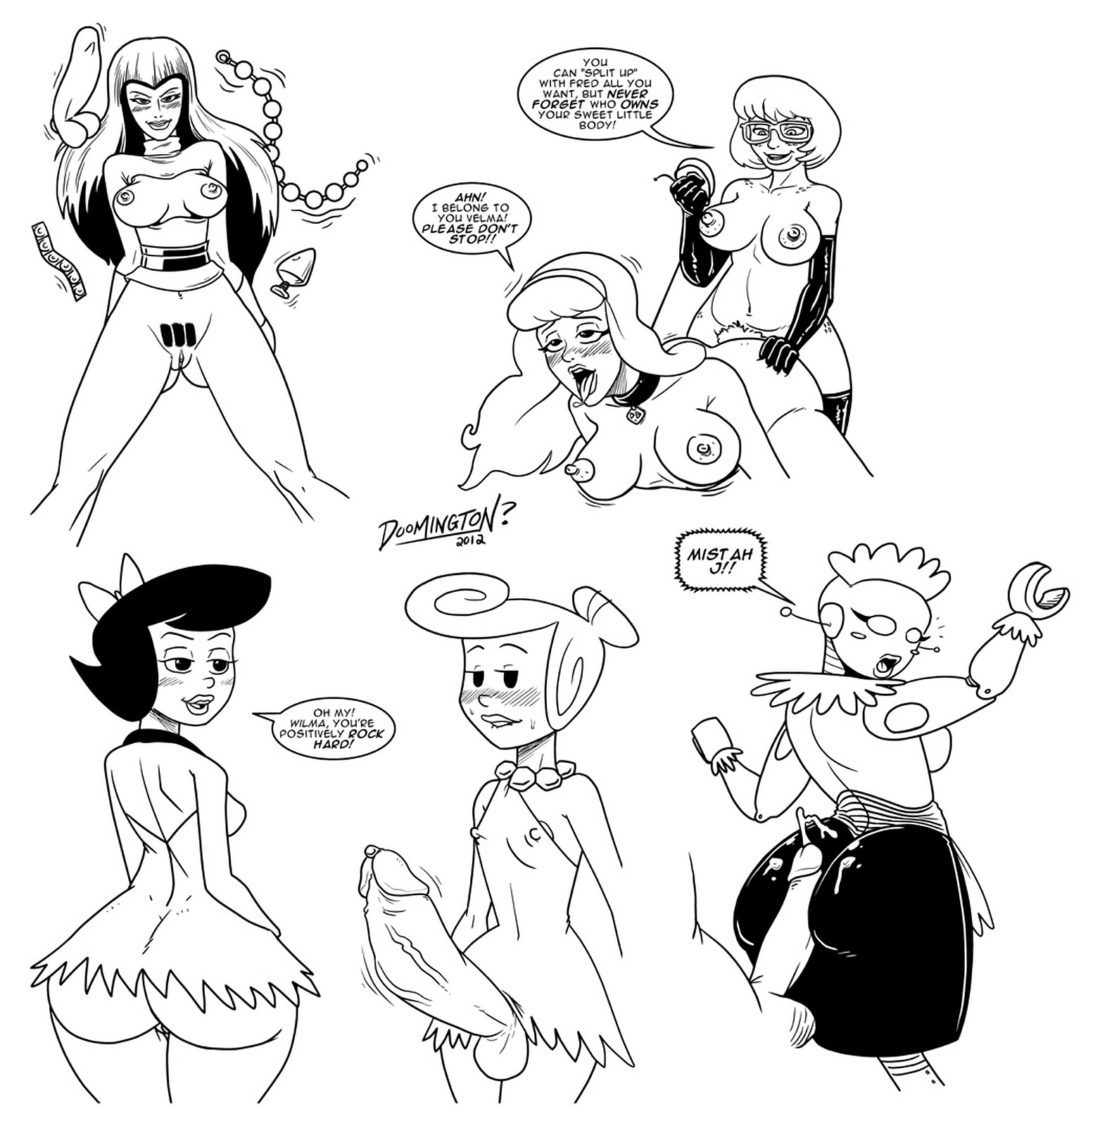 Doomington - Velma Daphne Betty Rubble Wilma Flintstone Gravity Girl Rosie the Robot